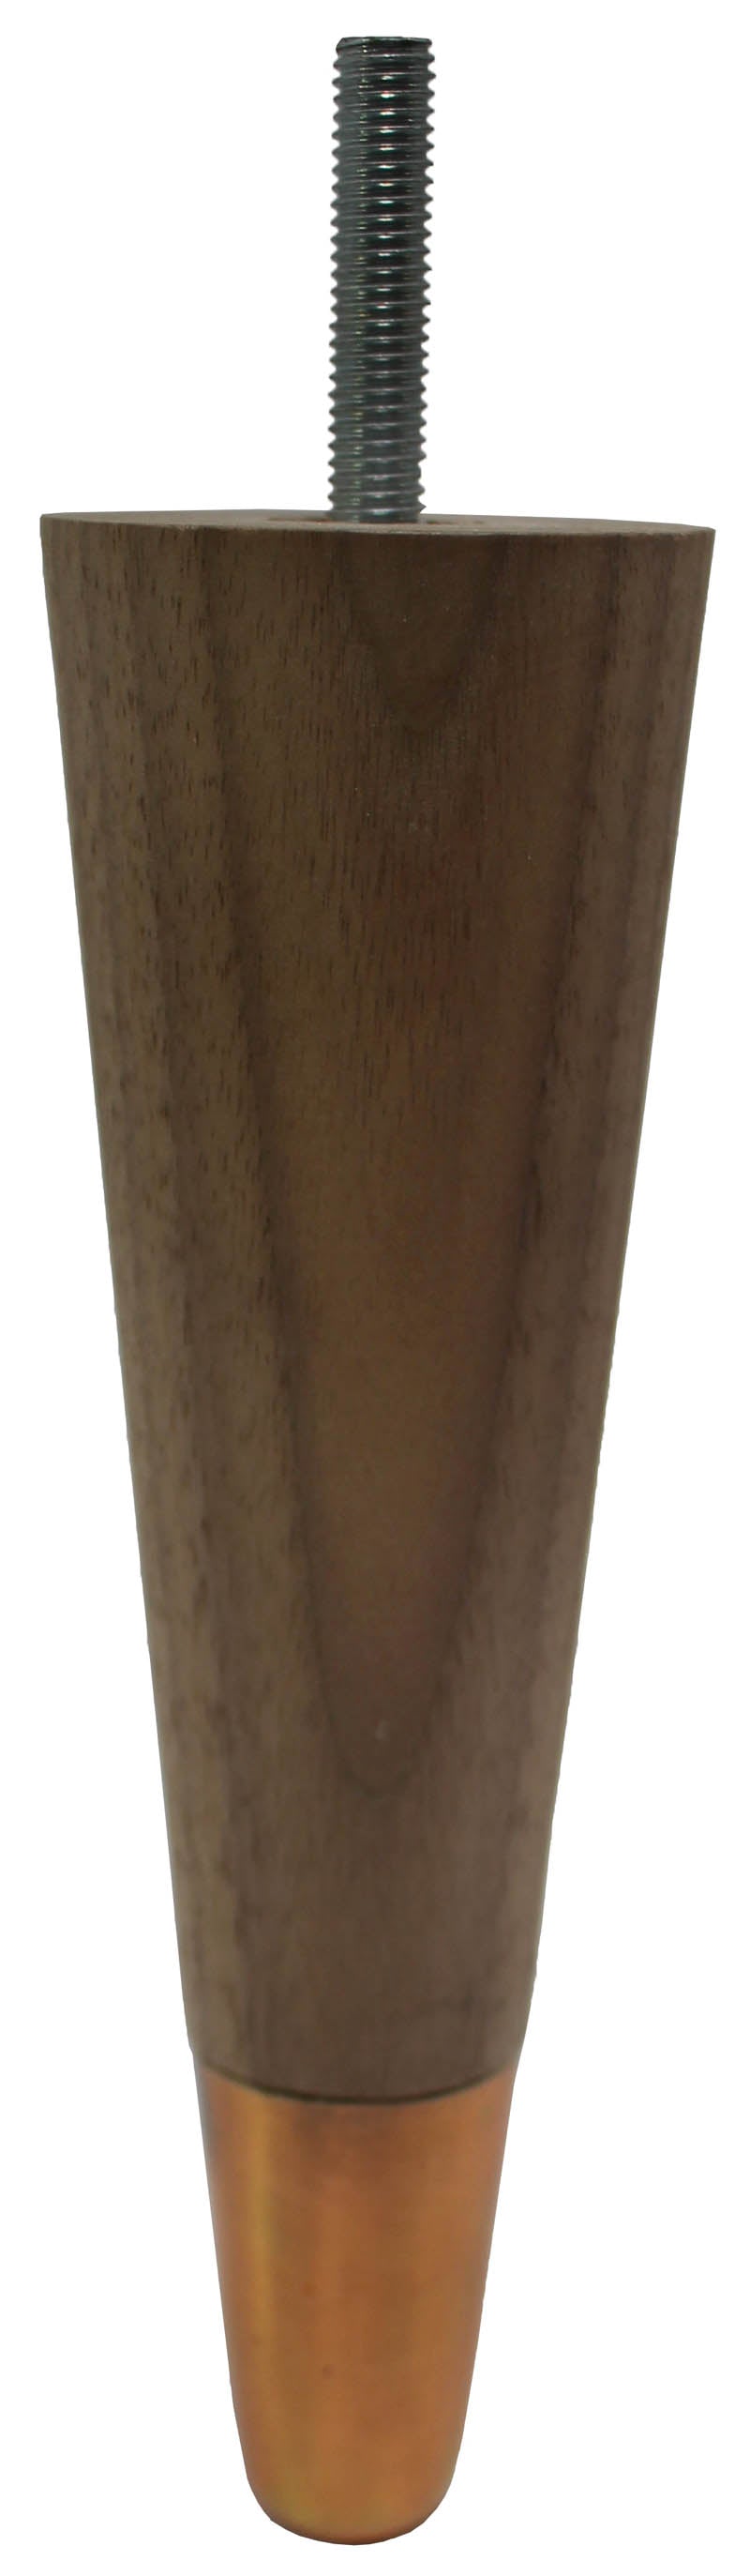 Agata Solid Walnut Tapered Furniture Legs - Raw Finish - Oiled Bronze Slipper Cups - Set of 4